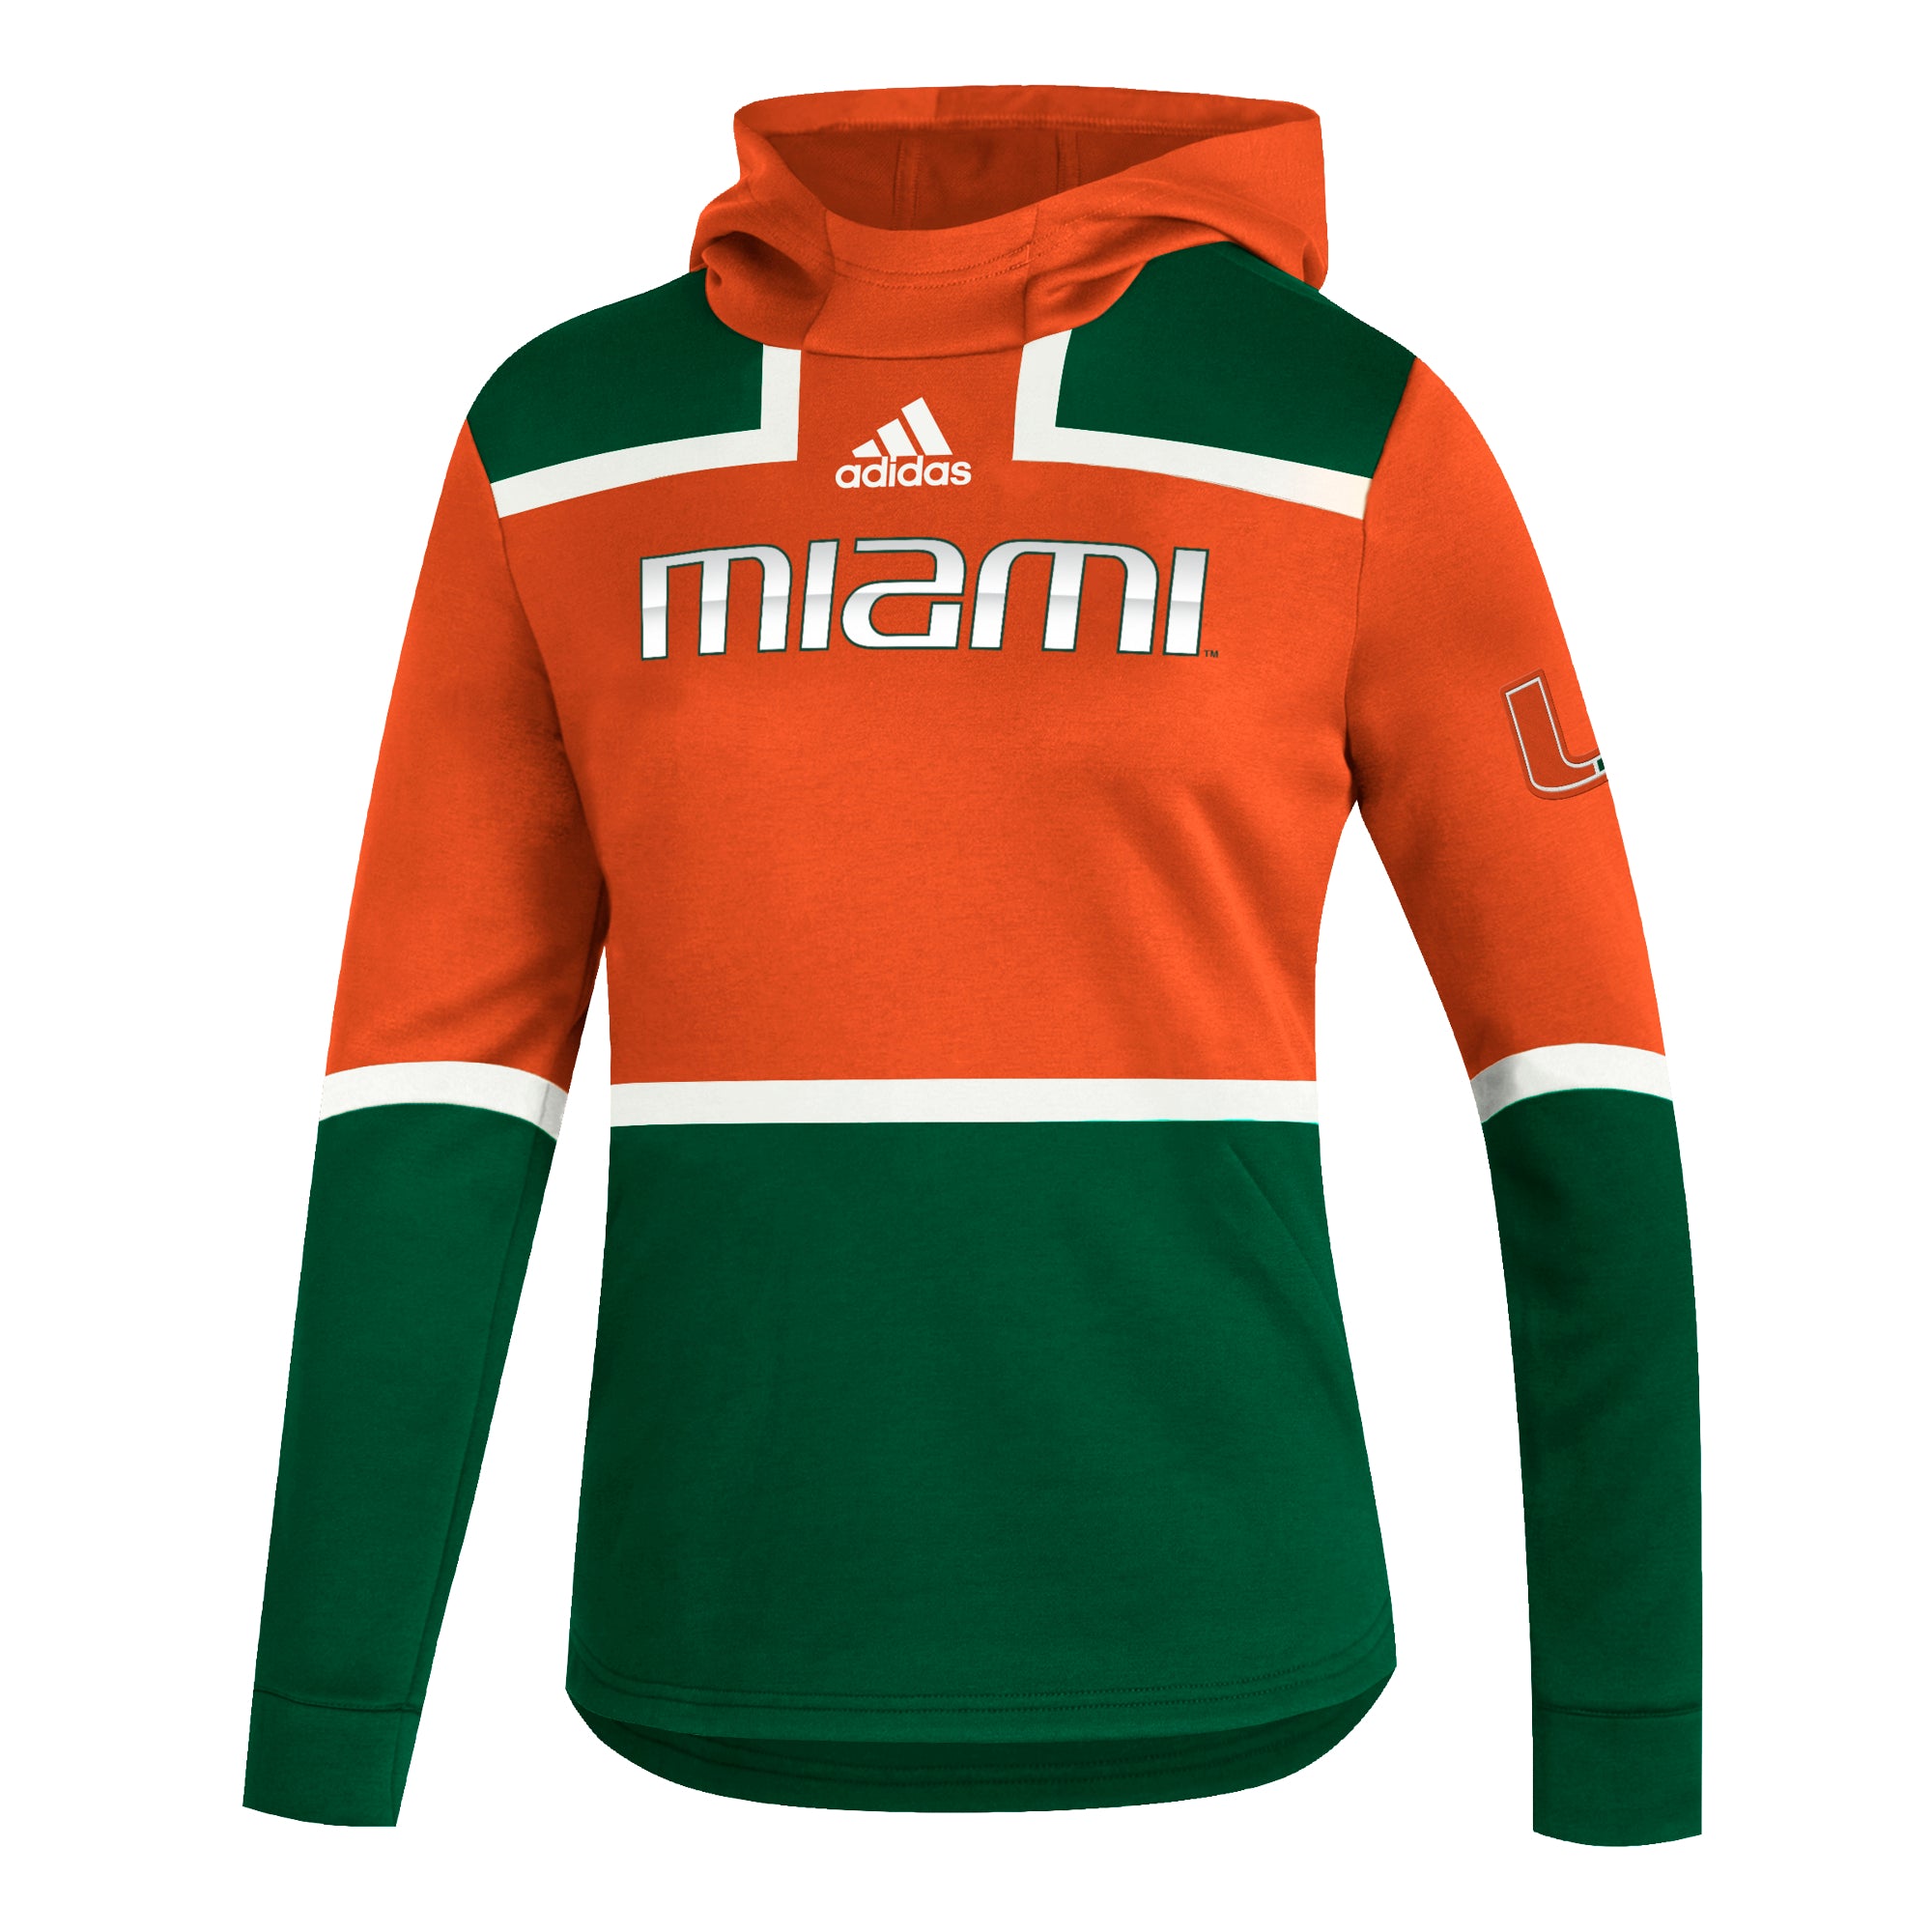 Miami Hurricanes adidas Women's Under the Lights Pullover Hoodie - Green/Orange